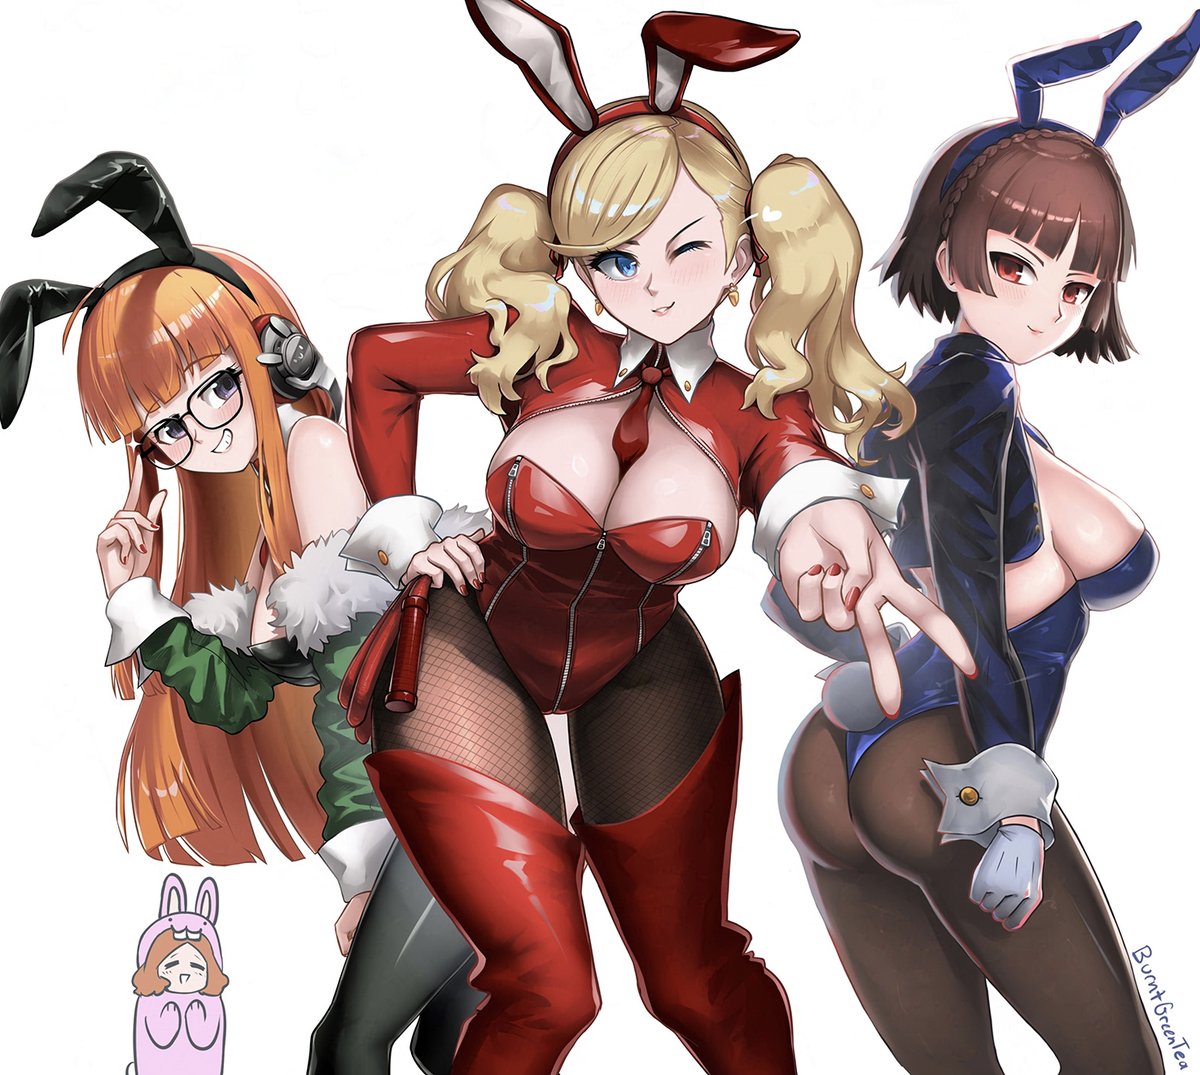 Bunny Persona 5 girls #Persona5